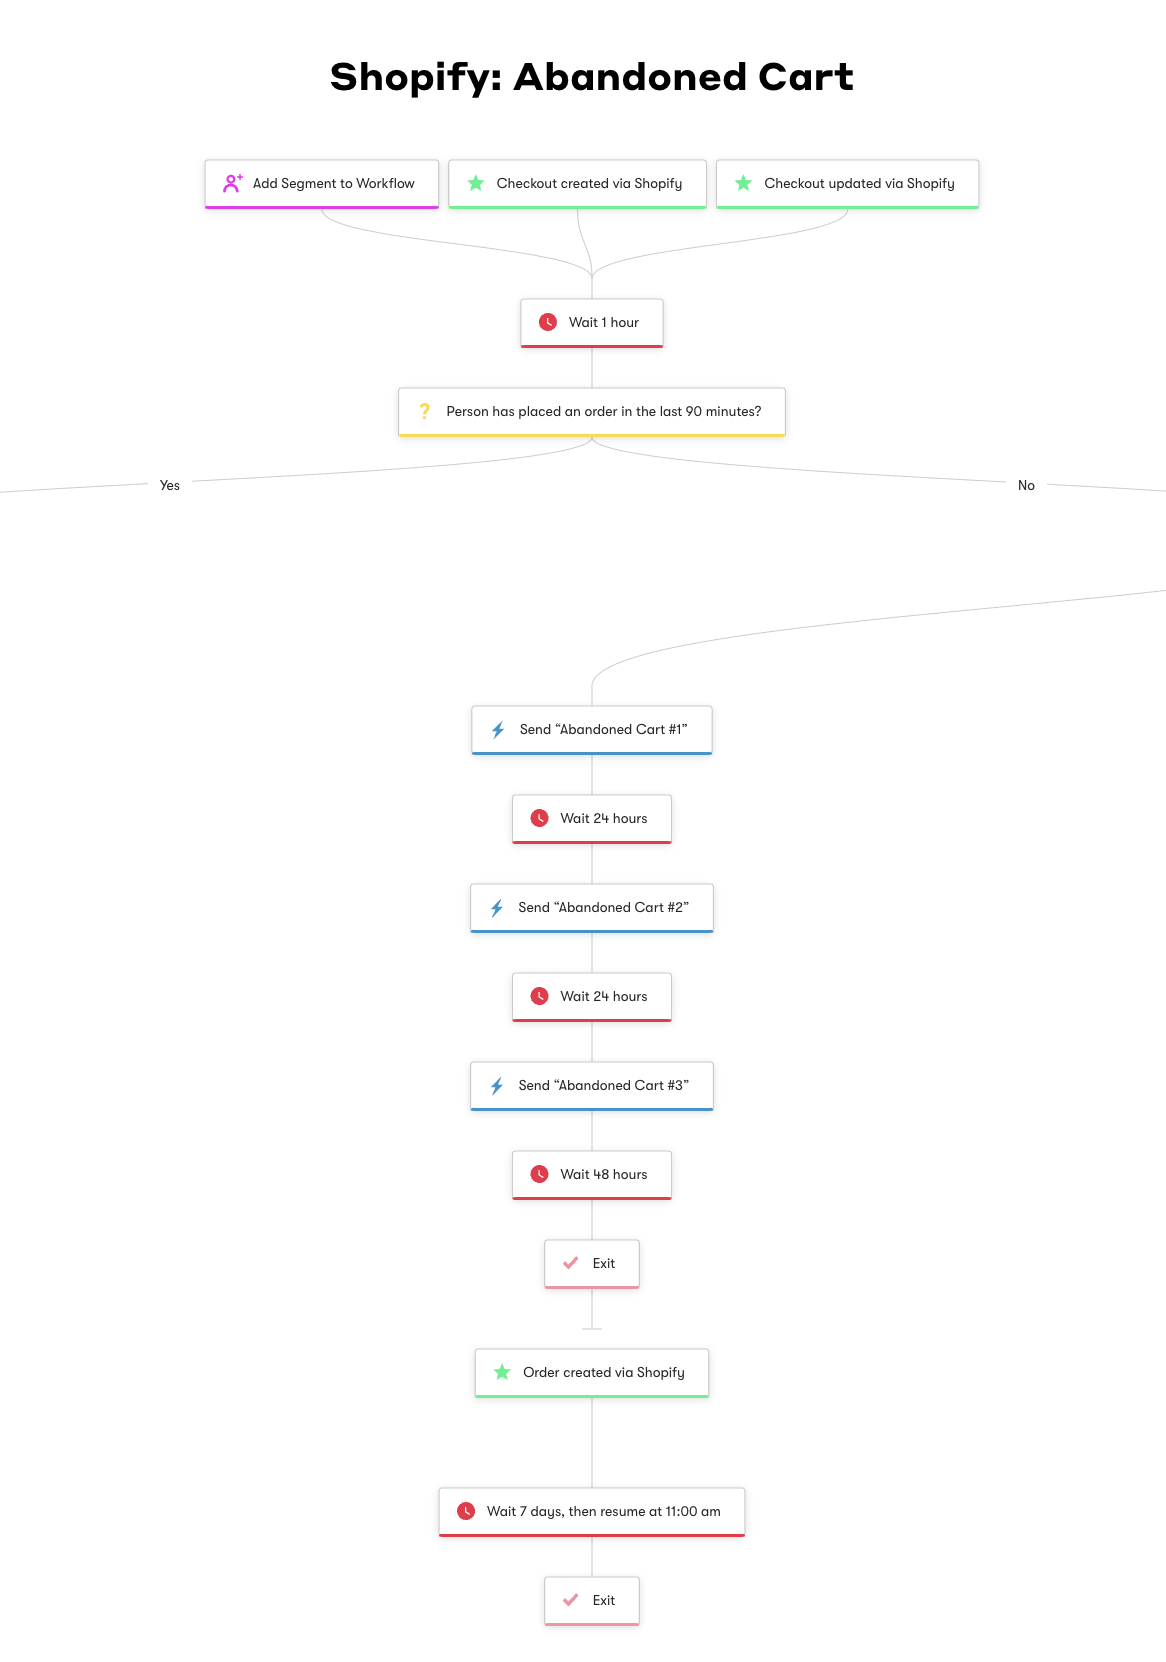 Shopify: Cart Abandonment - Workflow Diagram